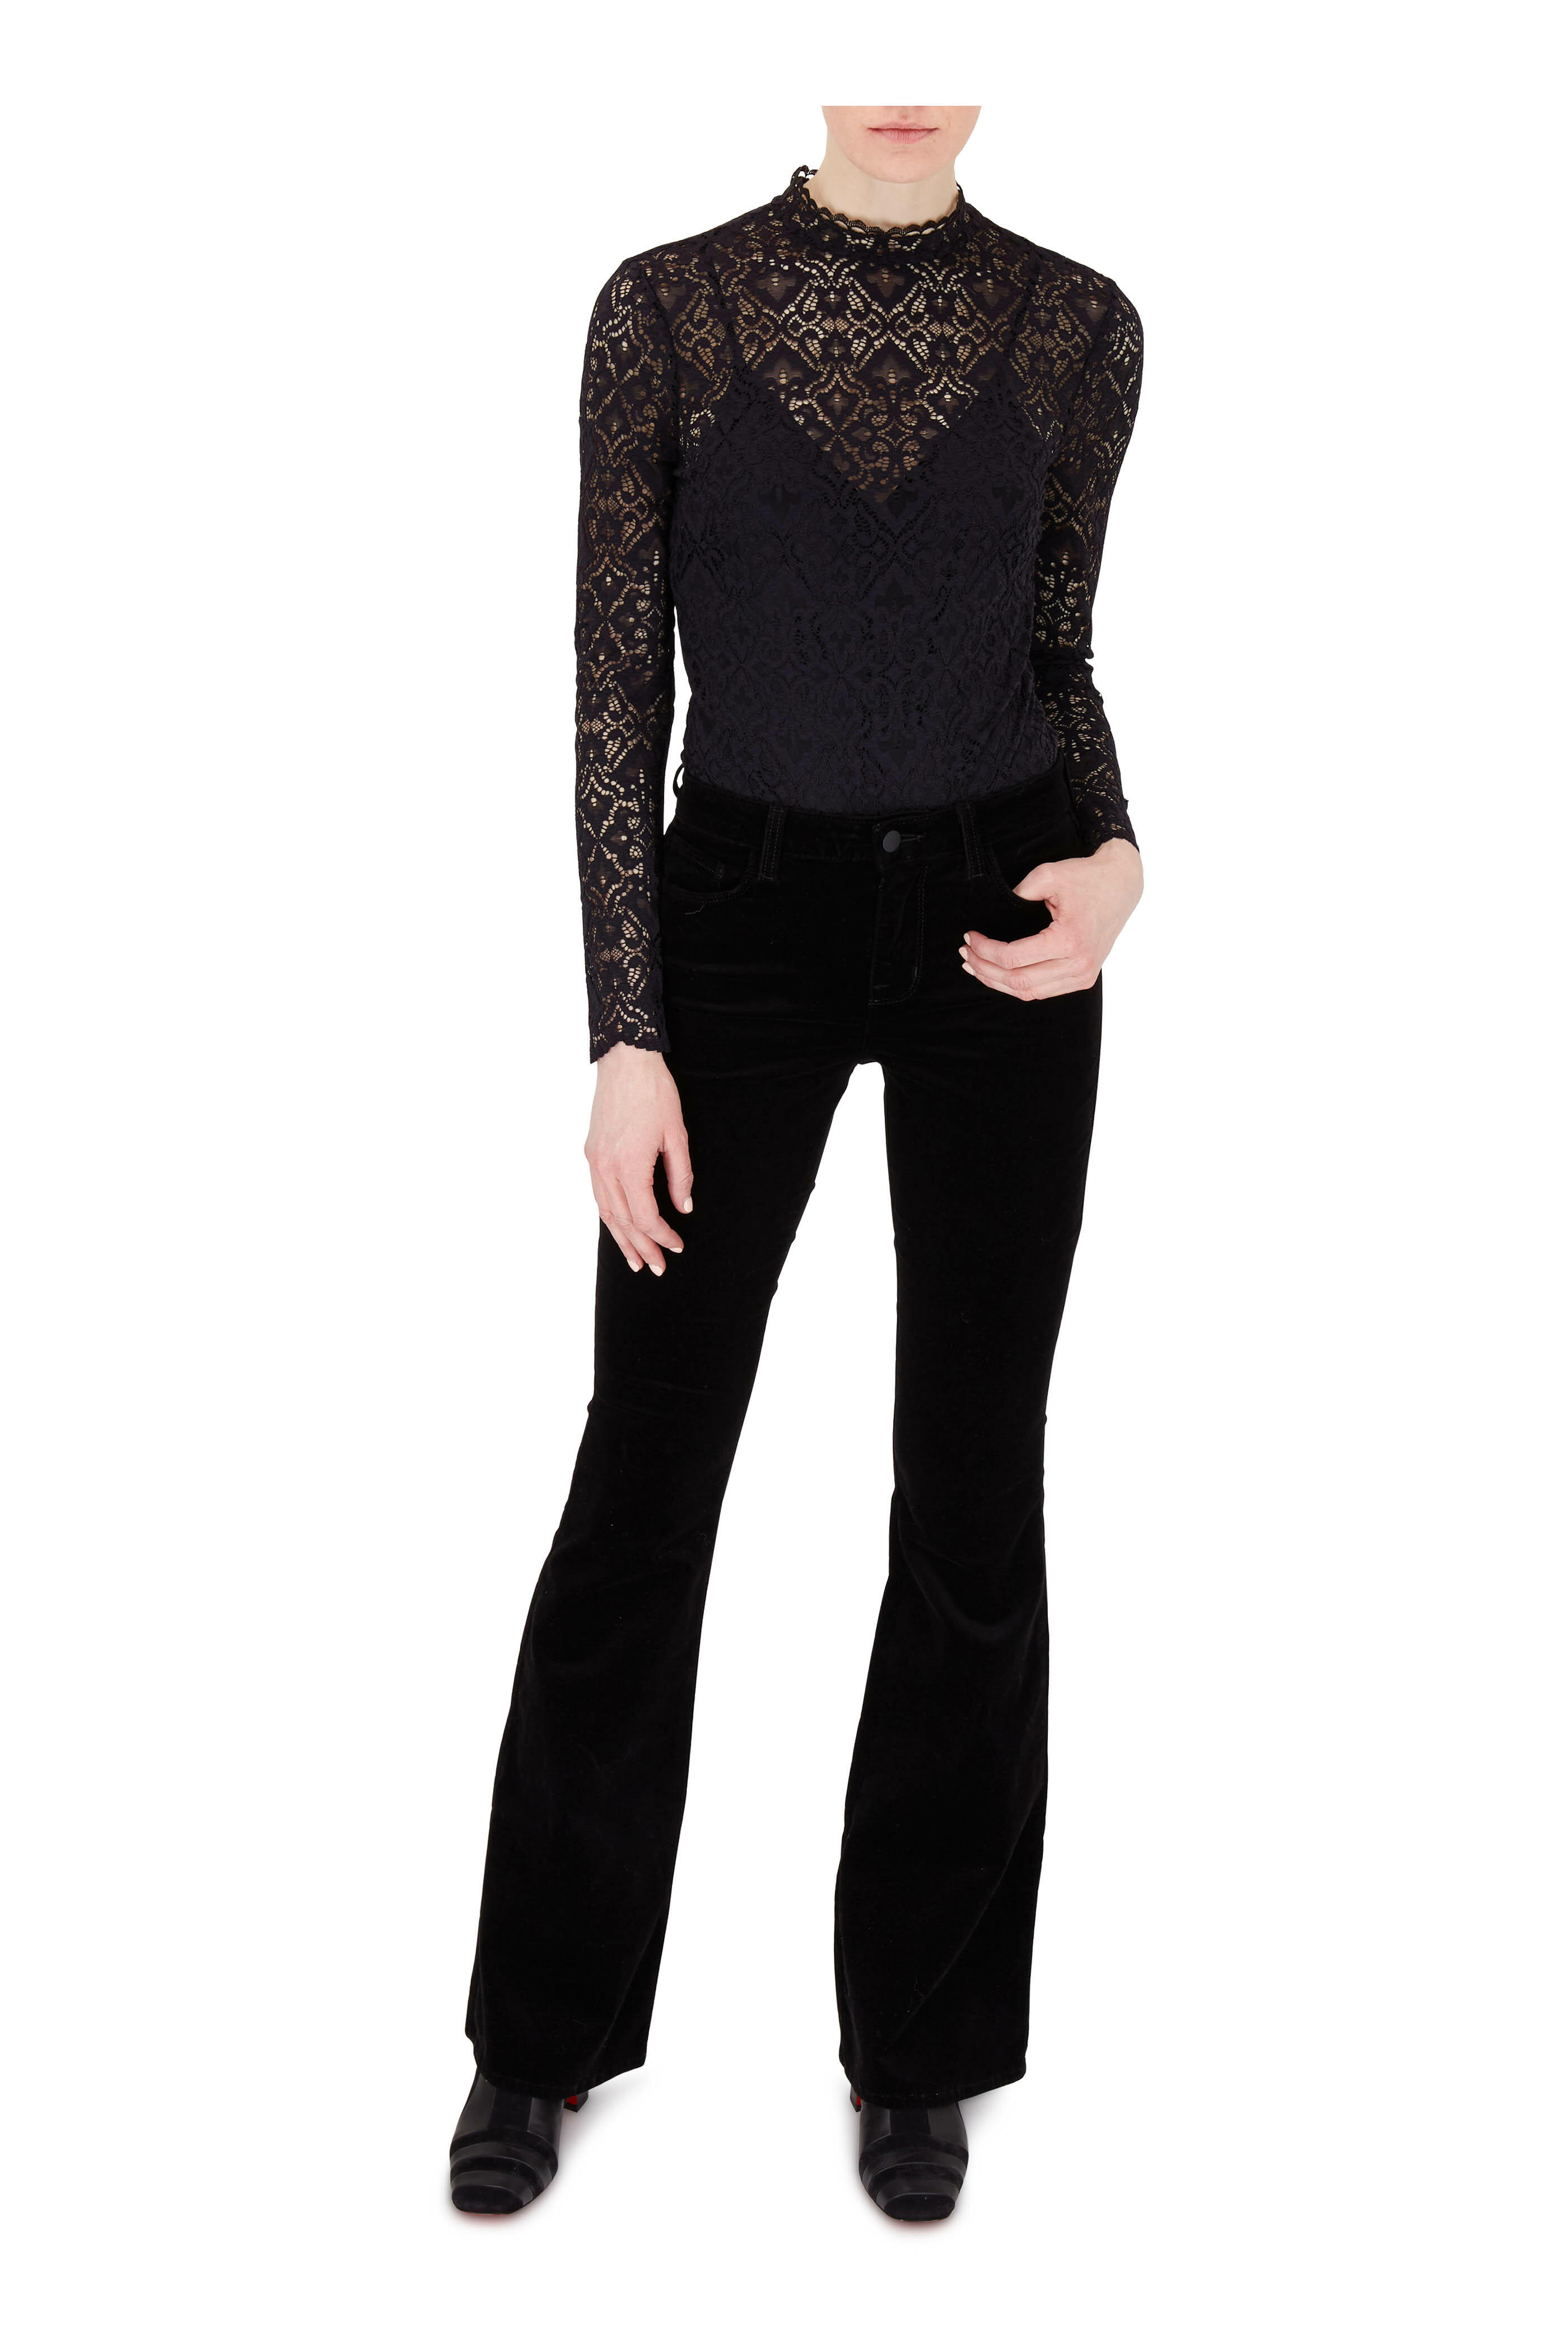 black lace bodysuit outfit shorts #bodysuit #outfit #summer #high #waist  #bodysuitoutfitsummerhi…